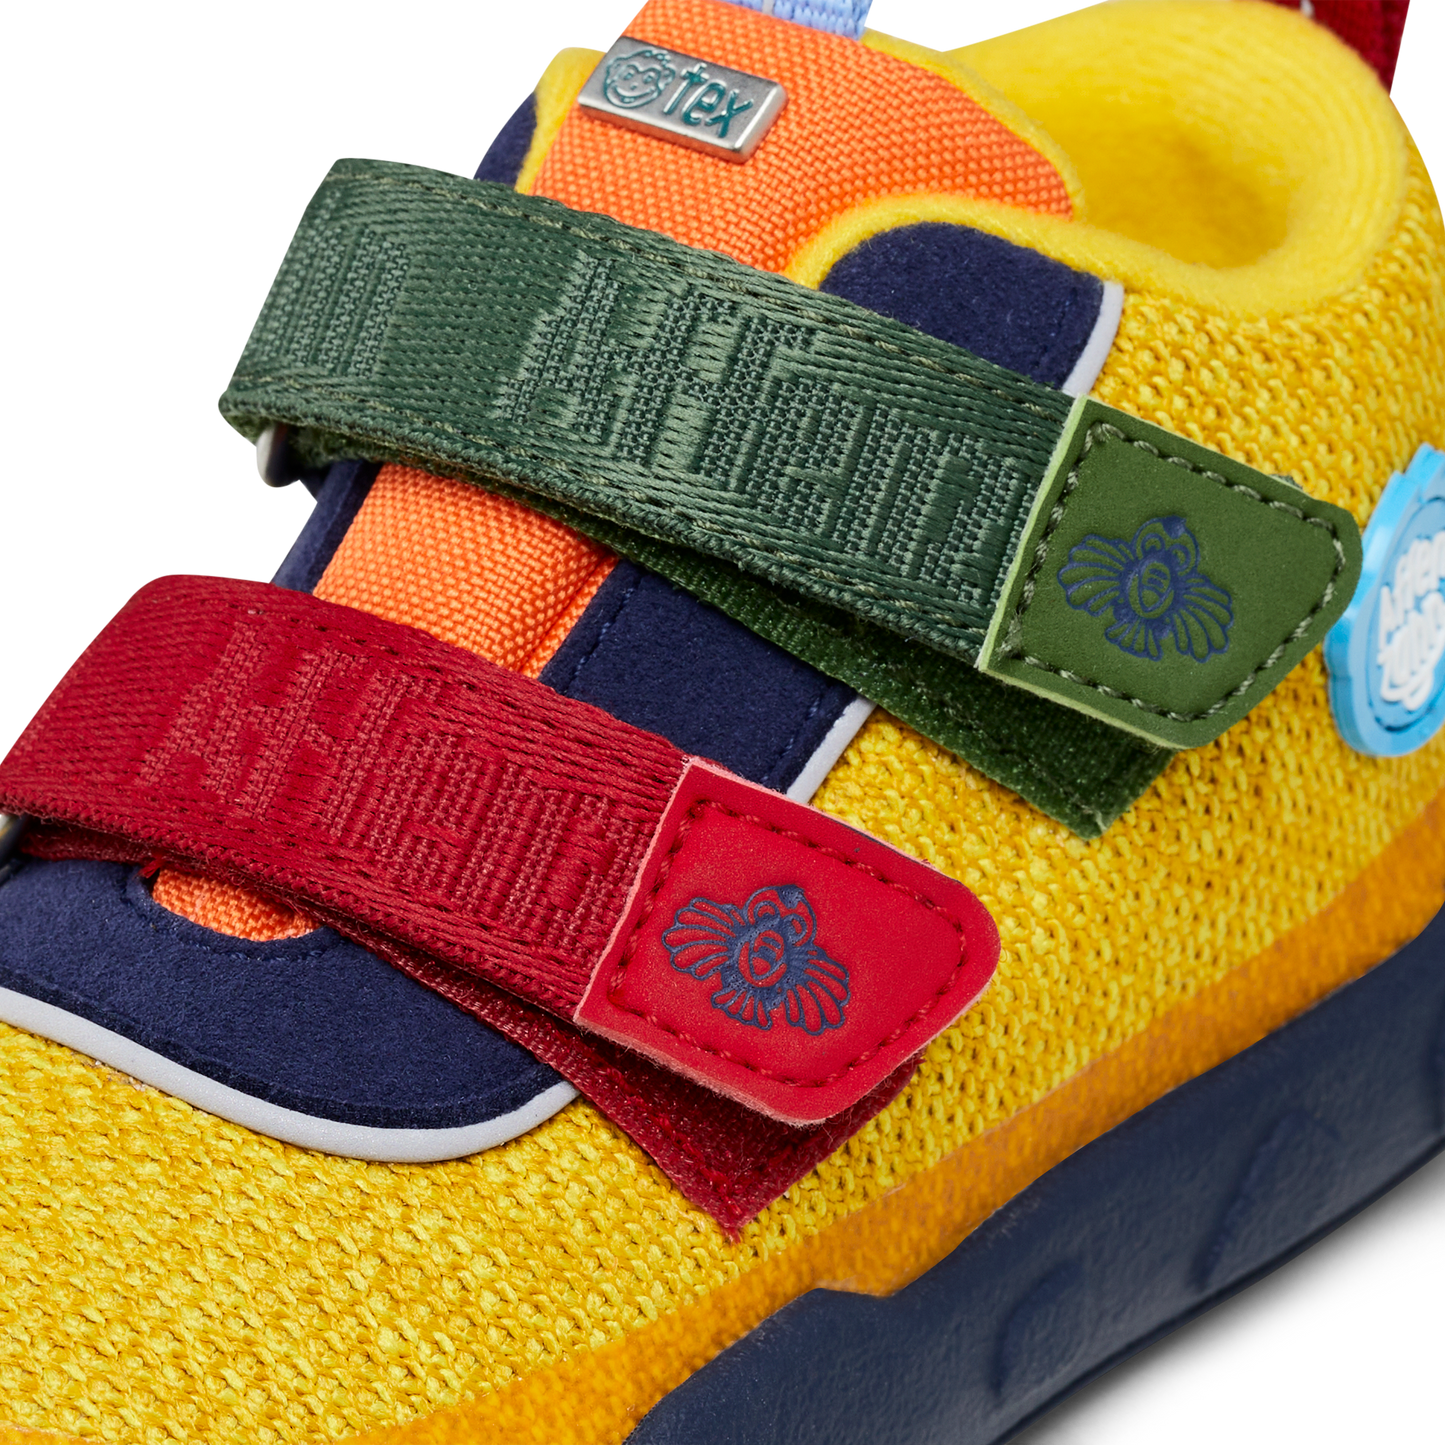 Affenzahn Low Boot Knit Happy barfods overgangssko til børn i farven toucan, detalje